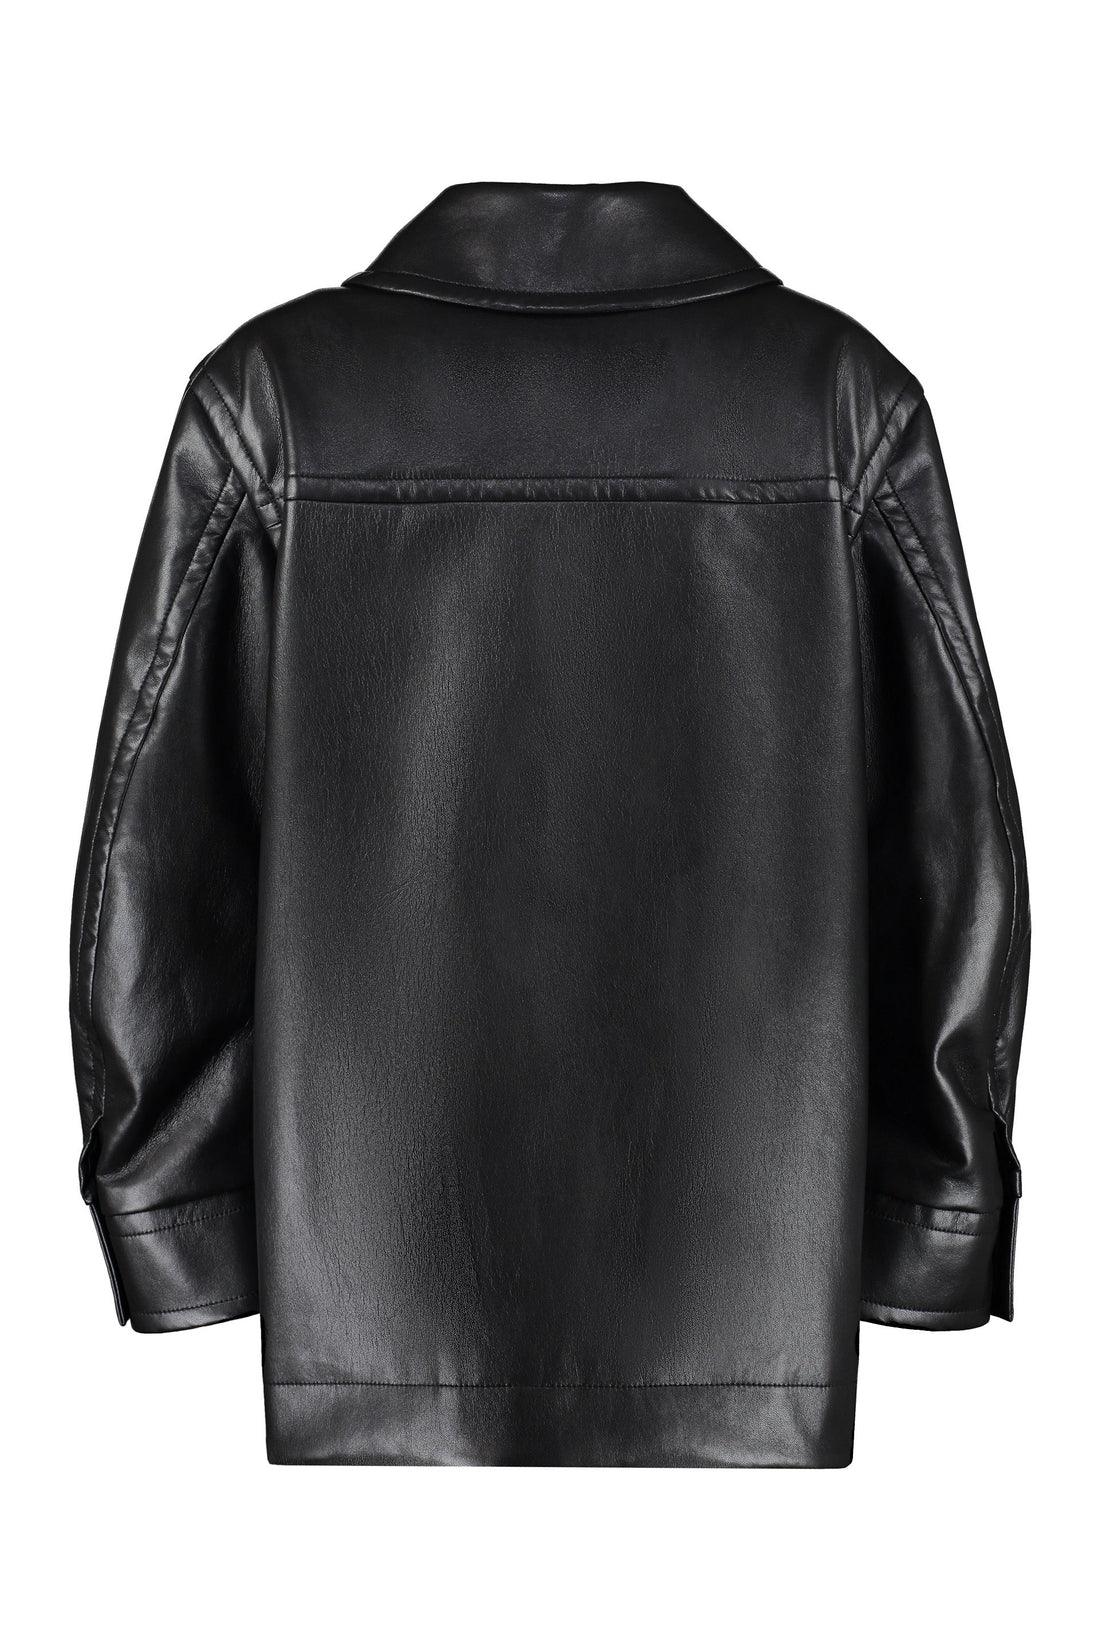 Rodebjer-OUTLET-SALE-Angelica Vegan leather jacket-ARCHIVIST